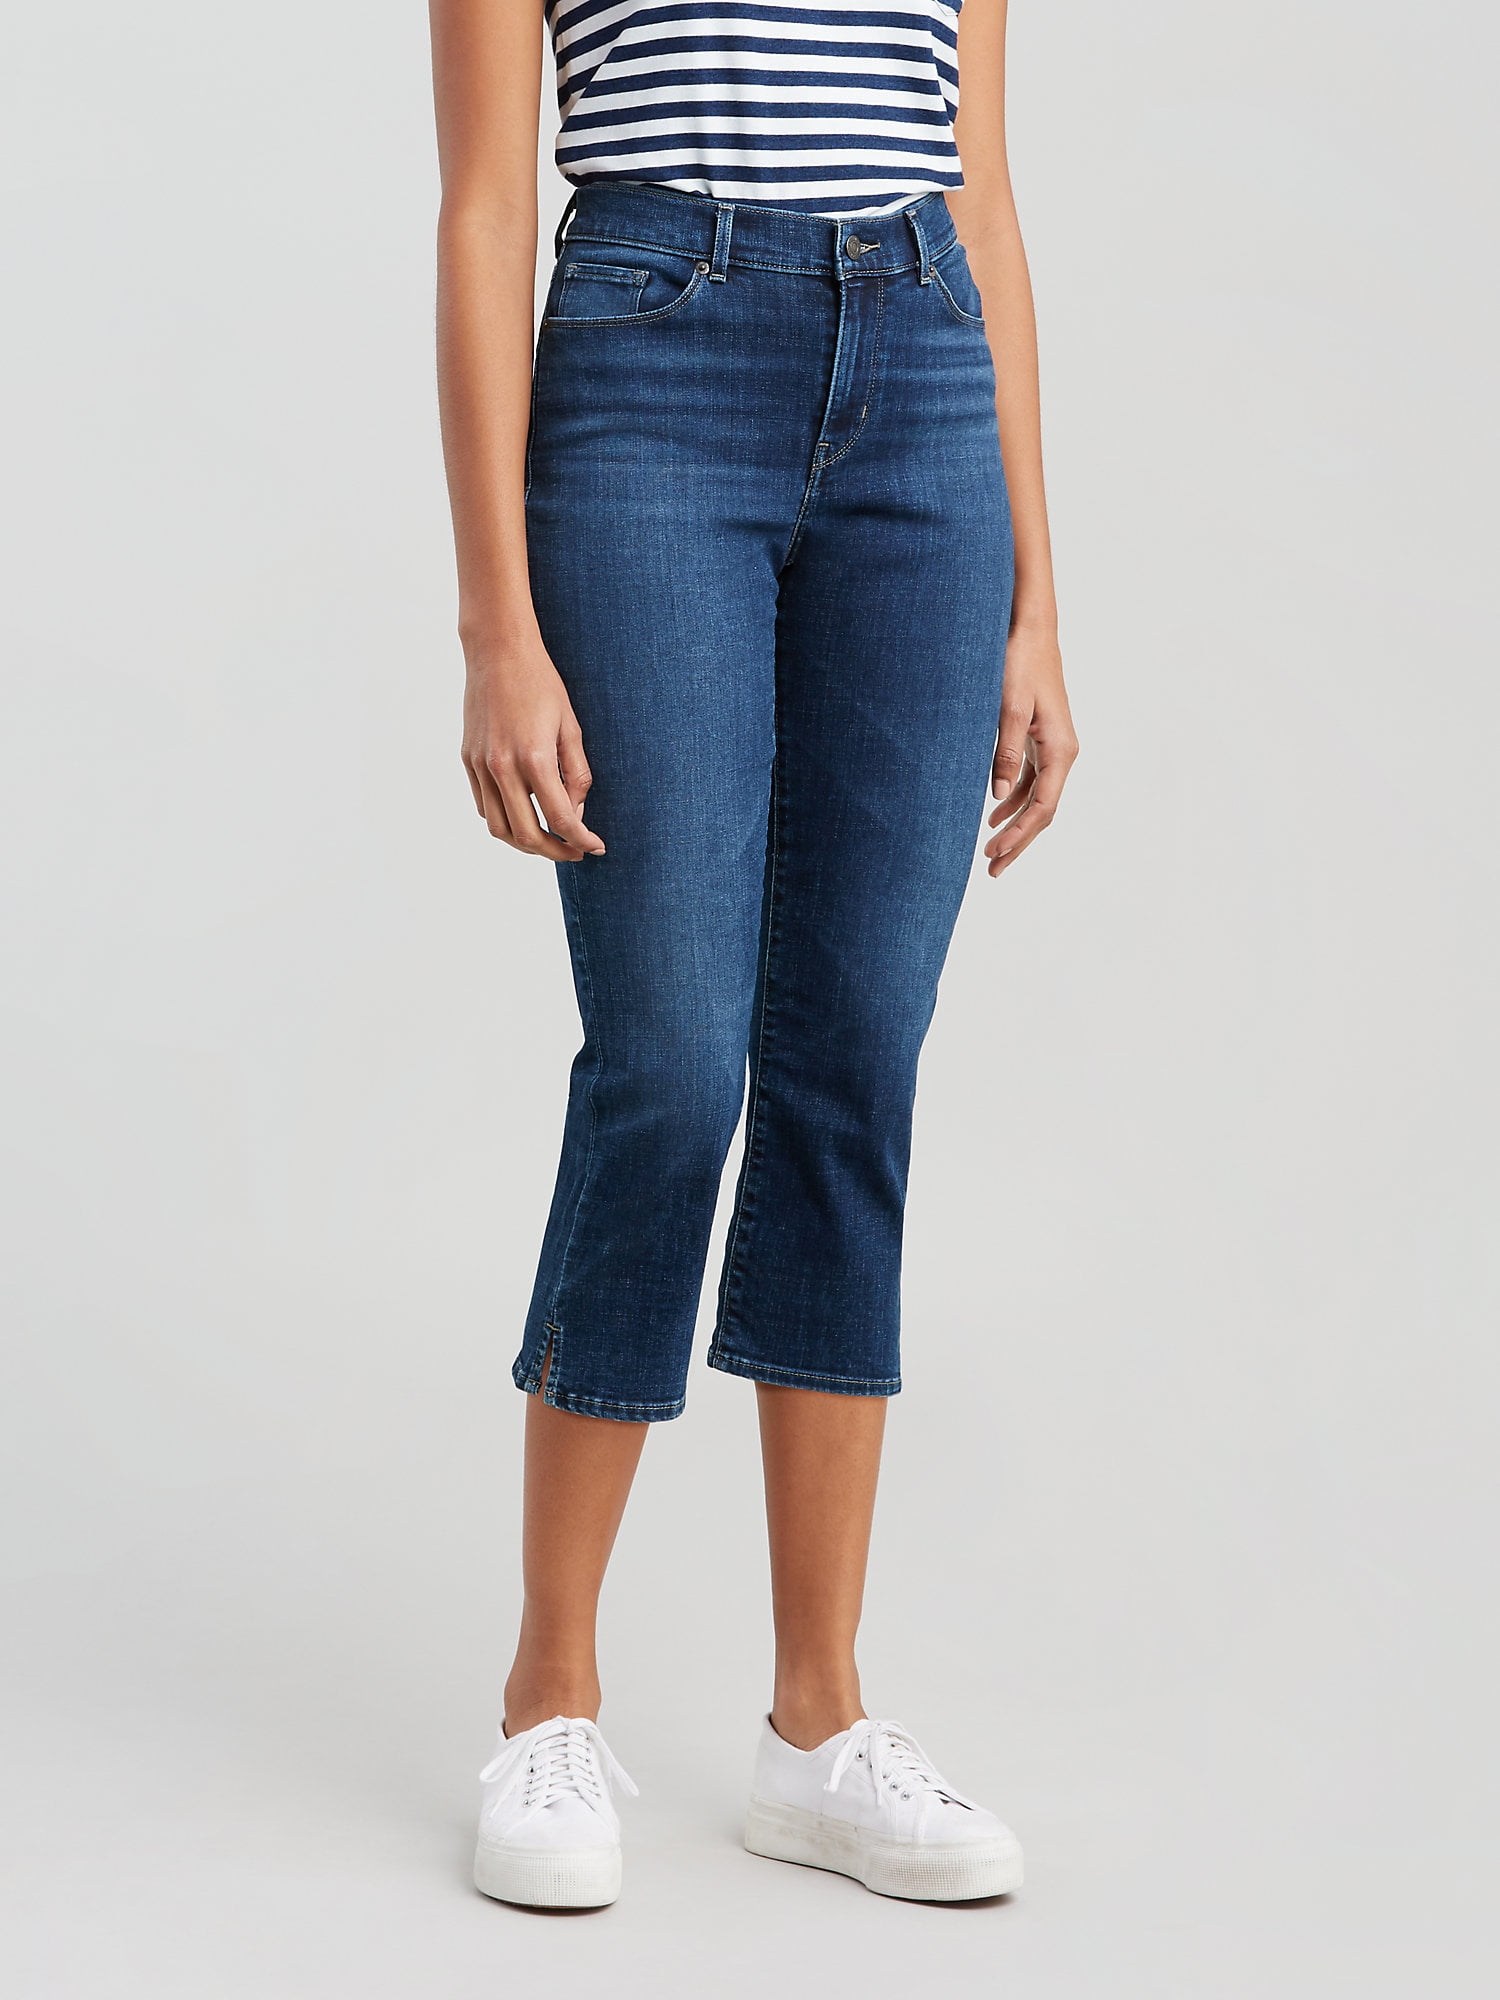 Levi's Women's Capri Jeans - Walmart.com